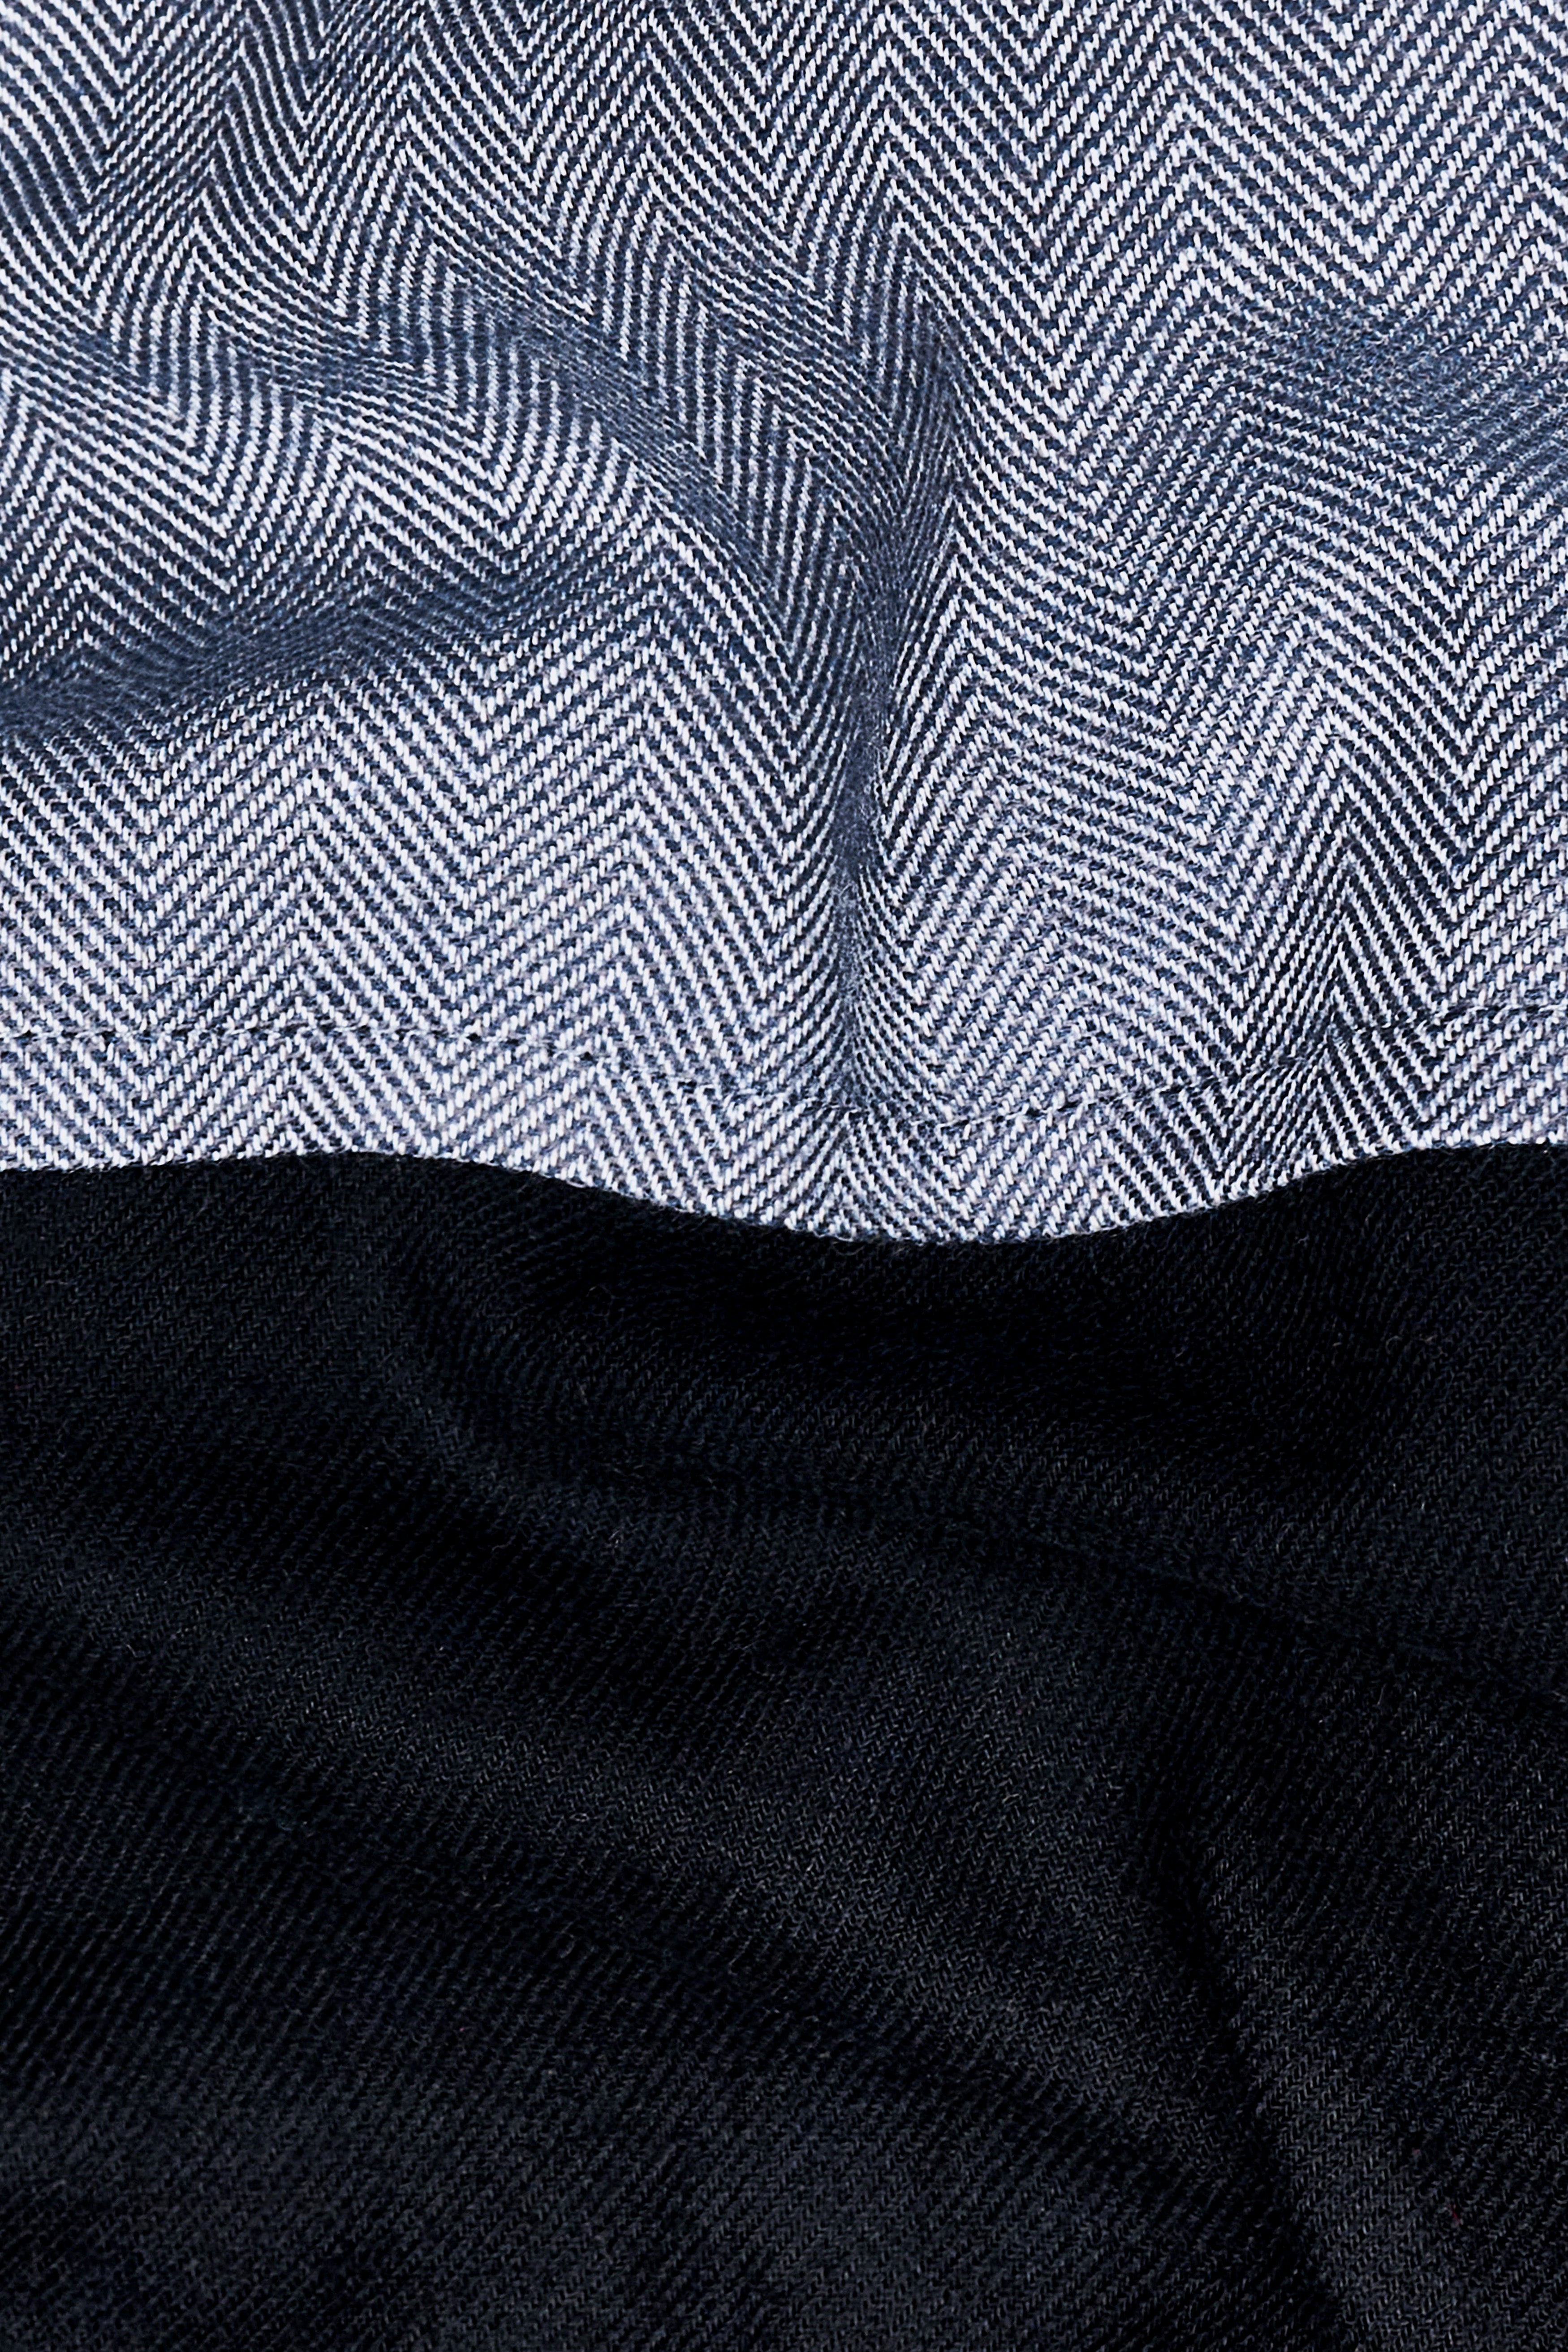 Waterloo Gray with Black Eye Embroidered Royal Oxford Designer Hoodie Shirt